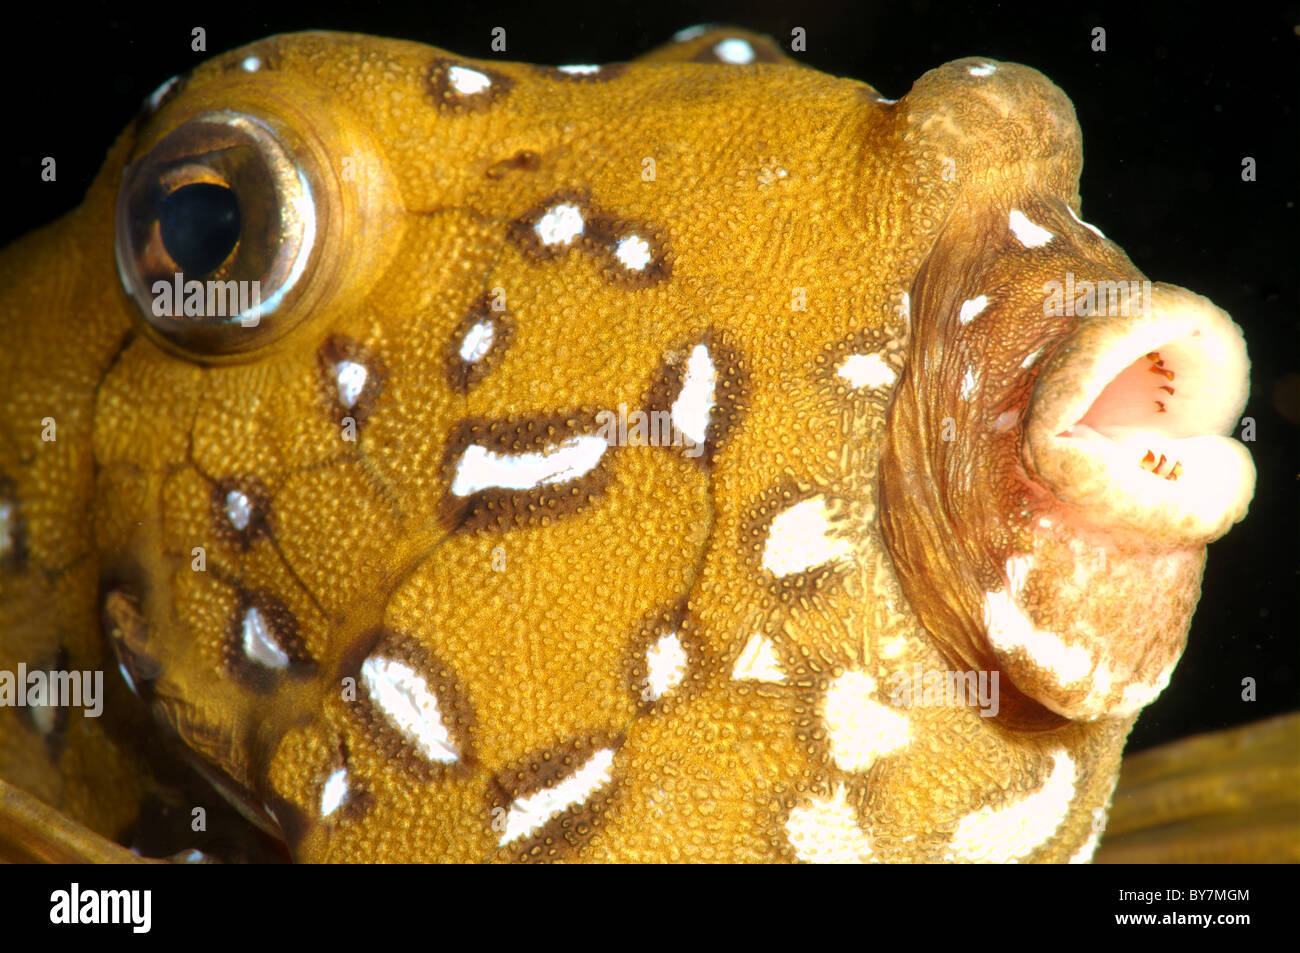 Black-spotted boxfish, Blue-spotted boxfish or Yellow boxfish (Ostracion cubicus) Red sea, Egypt Stock Photo